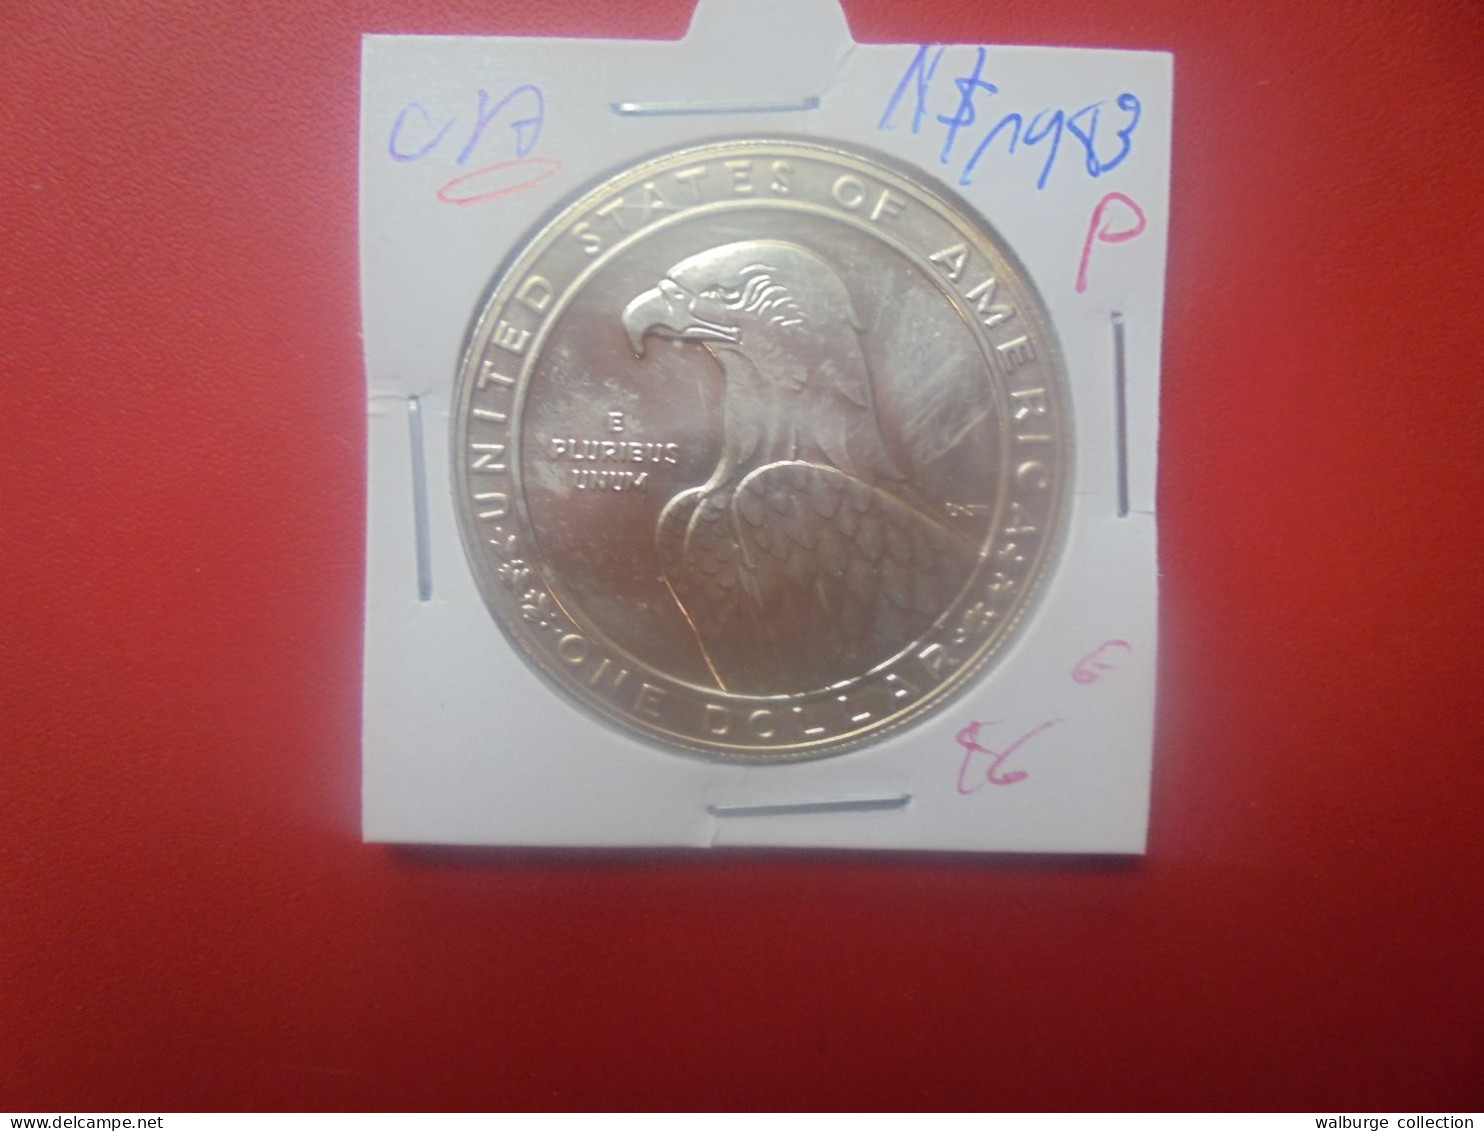 U.S.A 1$ 1983 "P" ARGENT (A.2) - Commemorative